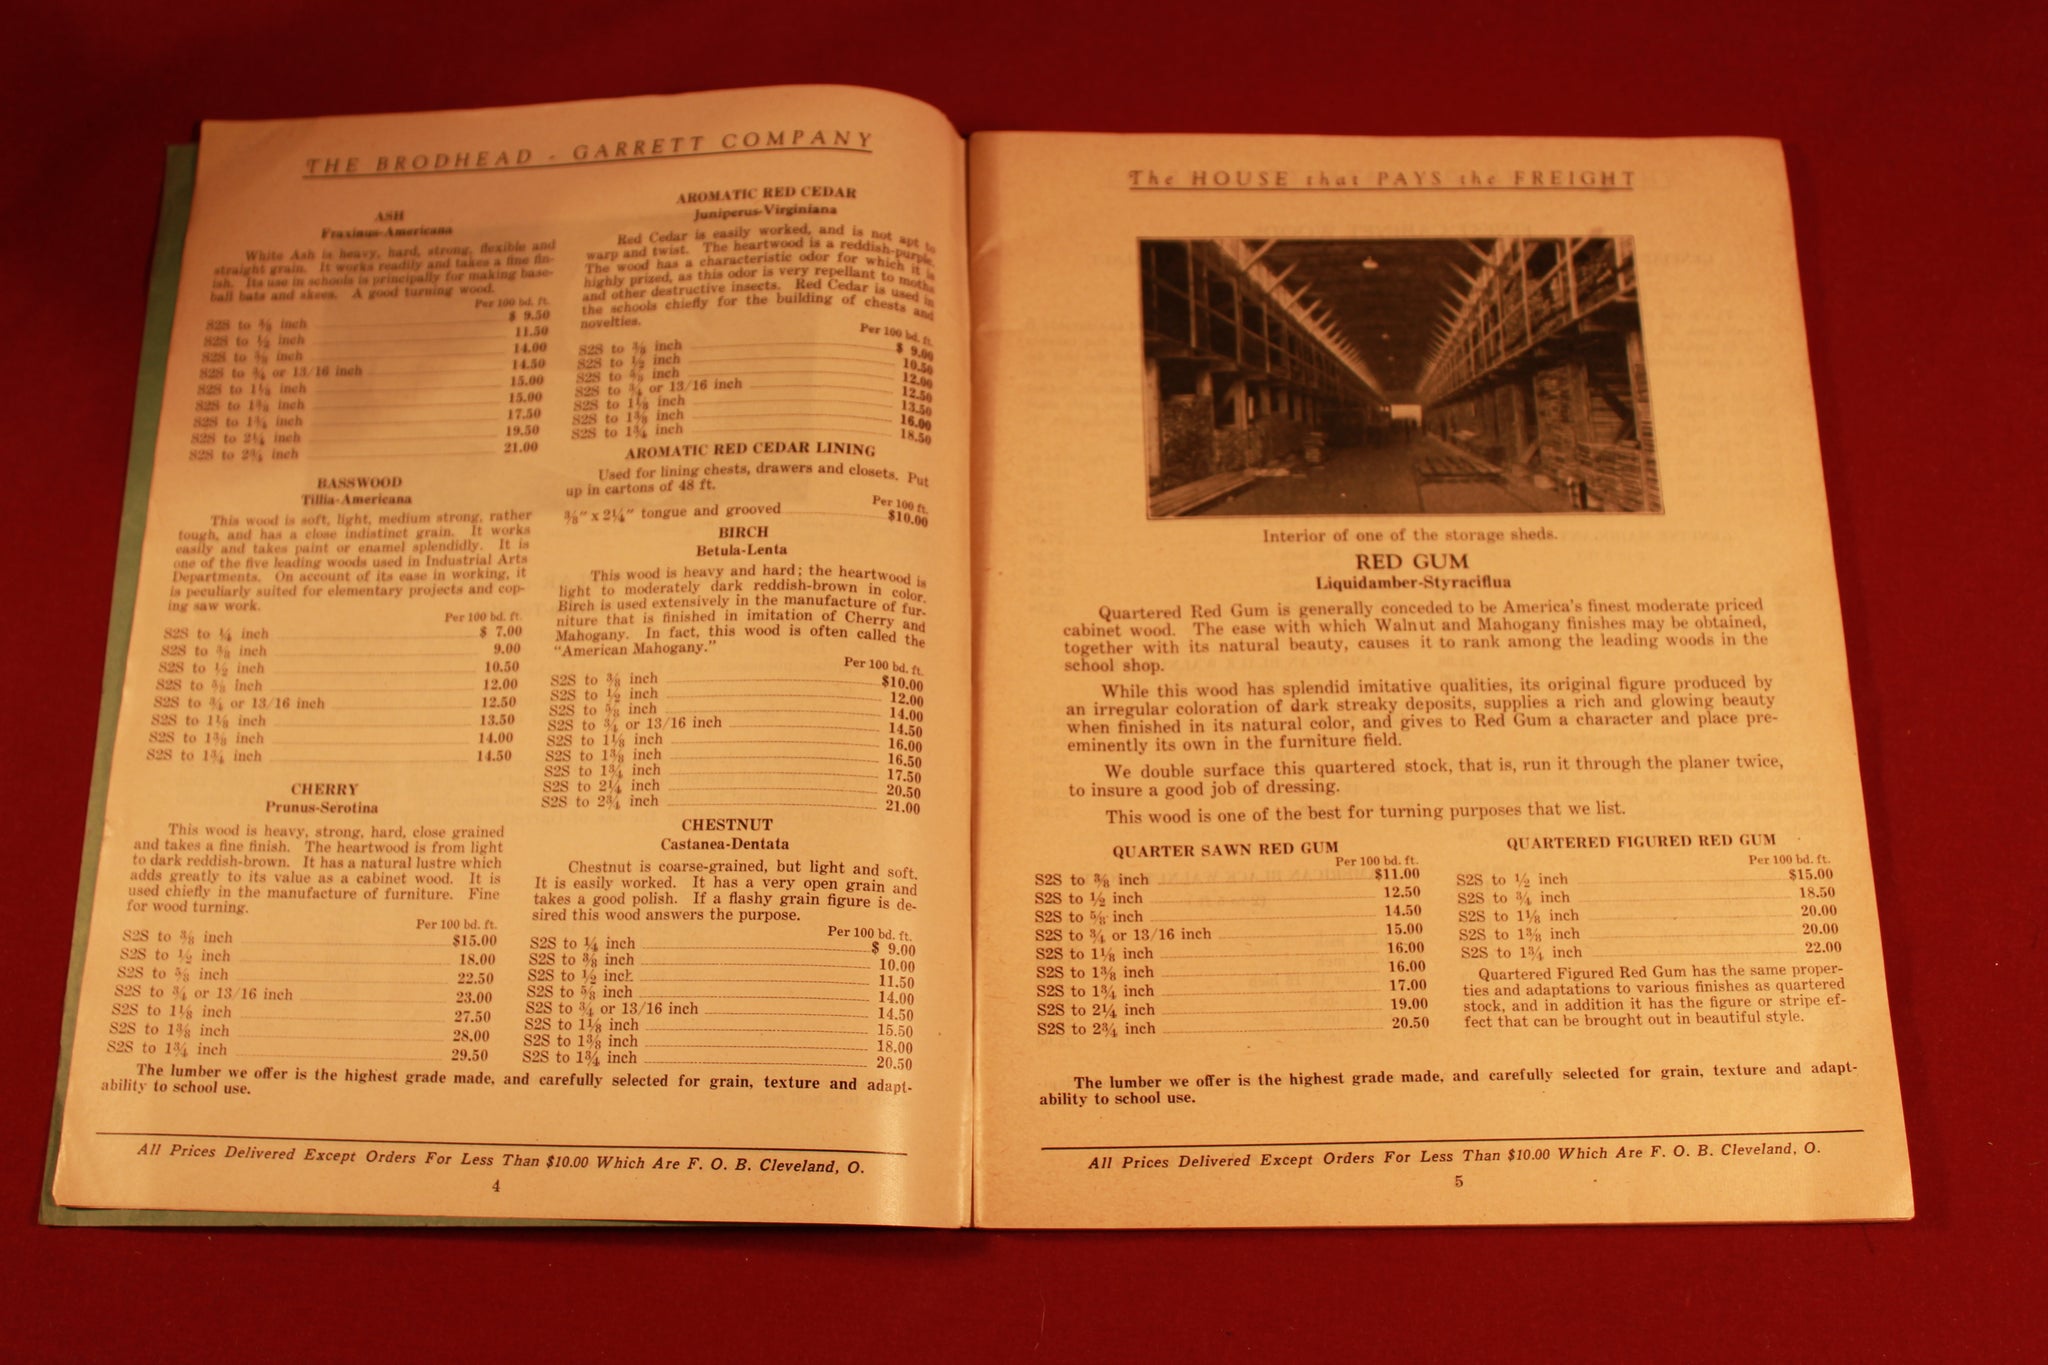 Vintage Brodhead-Garrett Co. Drafting Supplies Catelog Booklet Cleveland,  Ohio